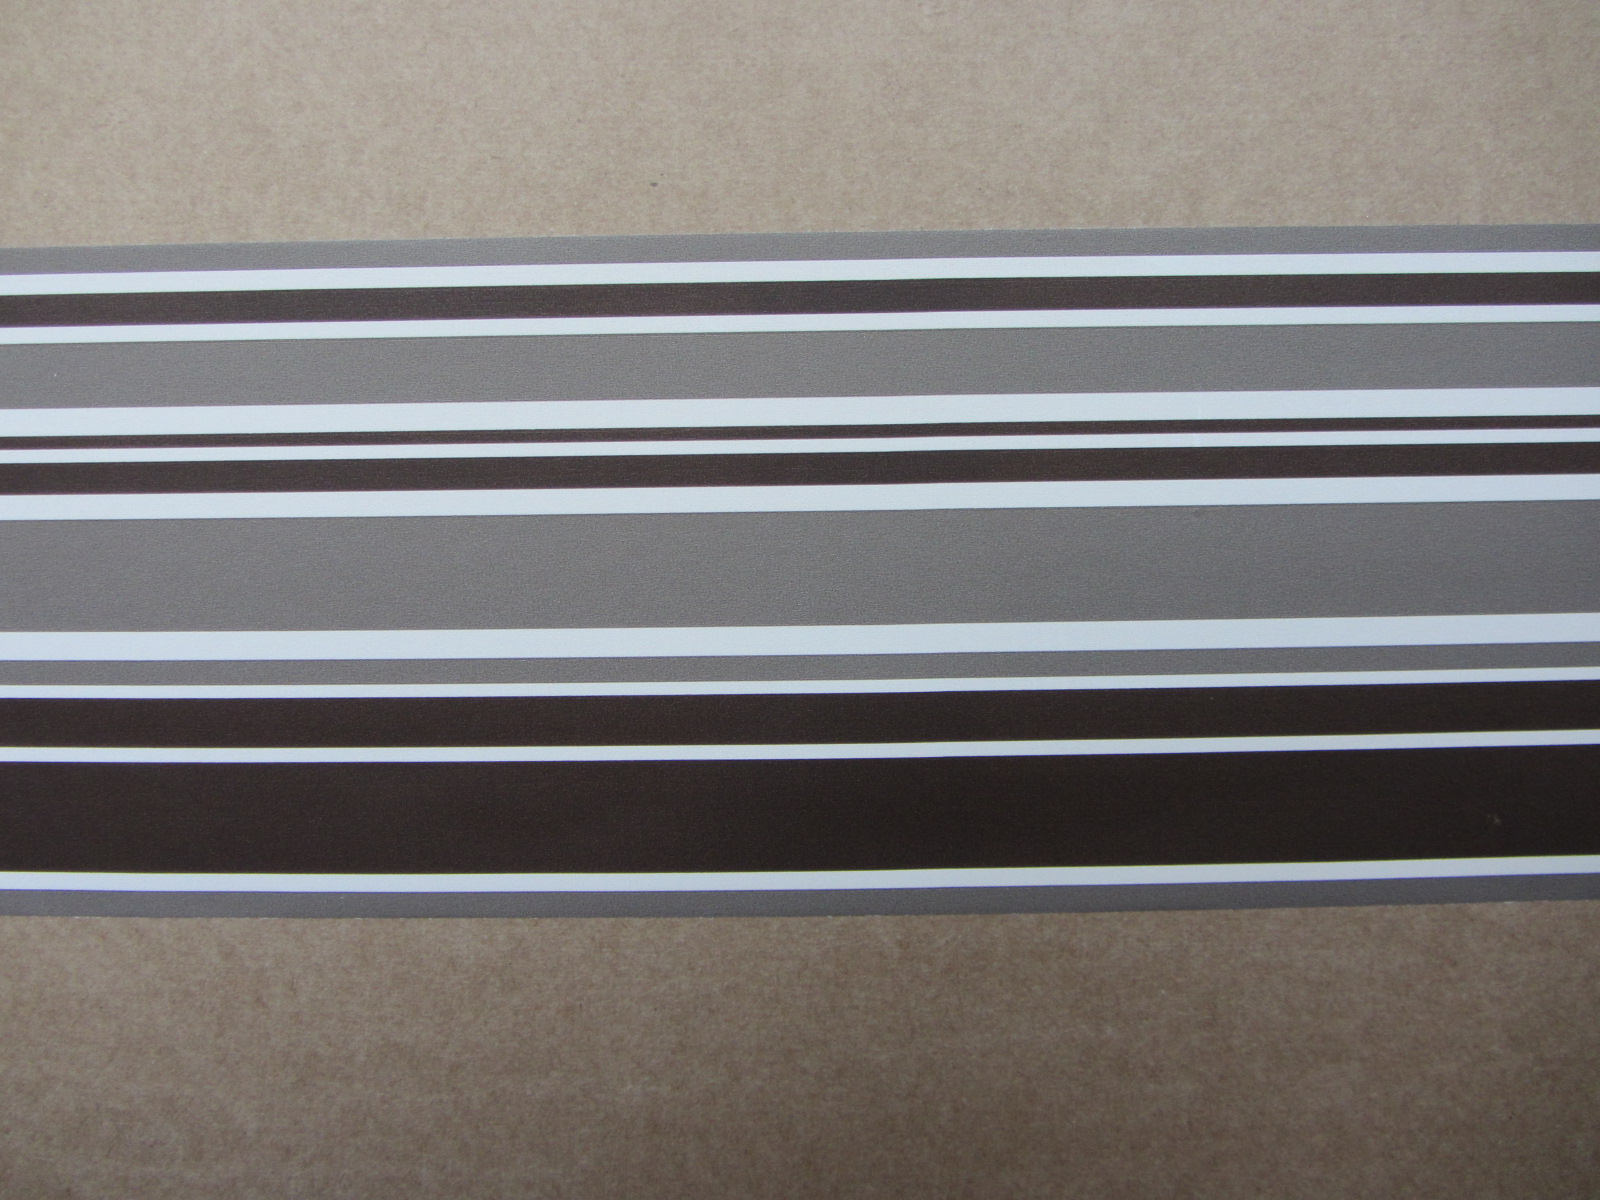 adhesive stripes